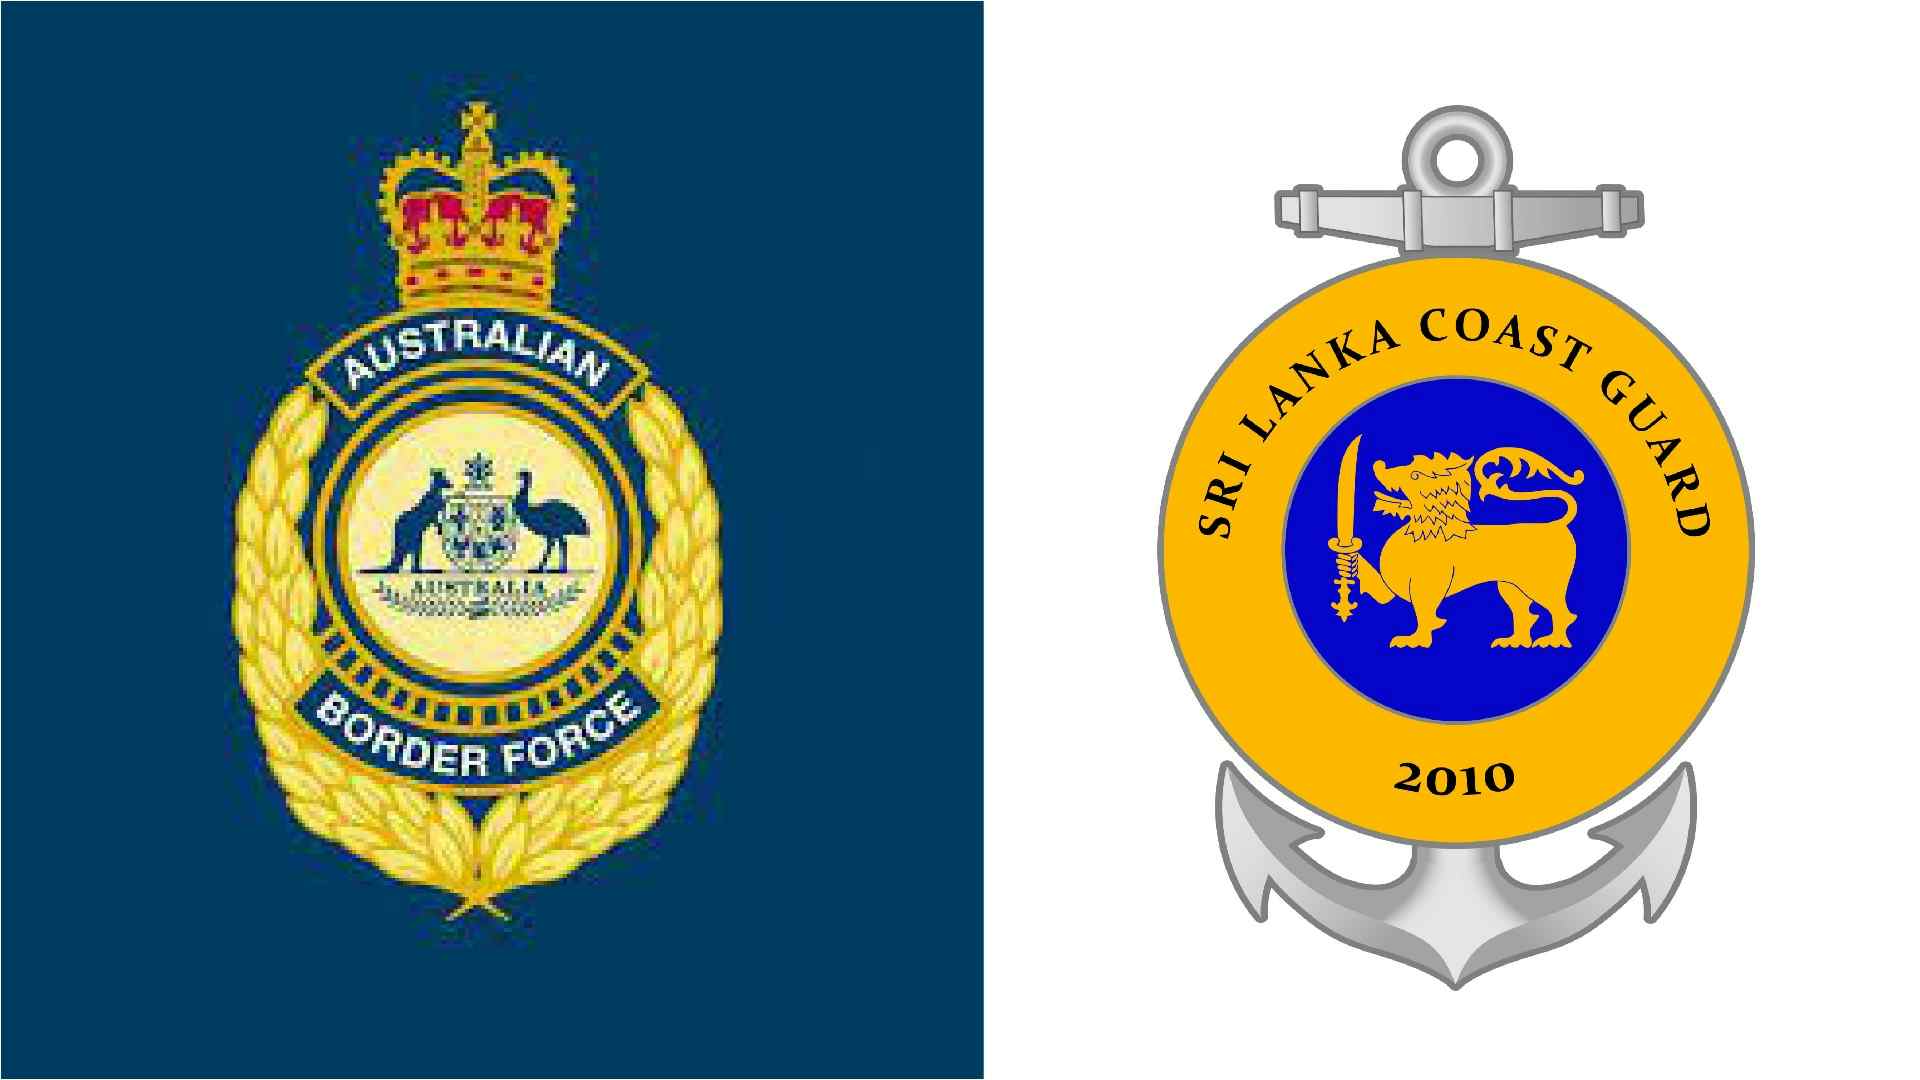 Maritime crime: Joint Aus.-SL Op. ‘Disi-Rela’ kicks off